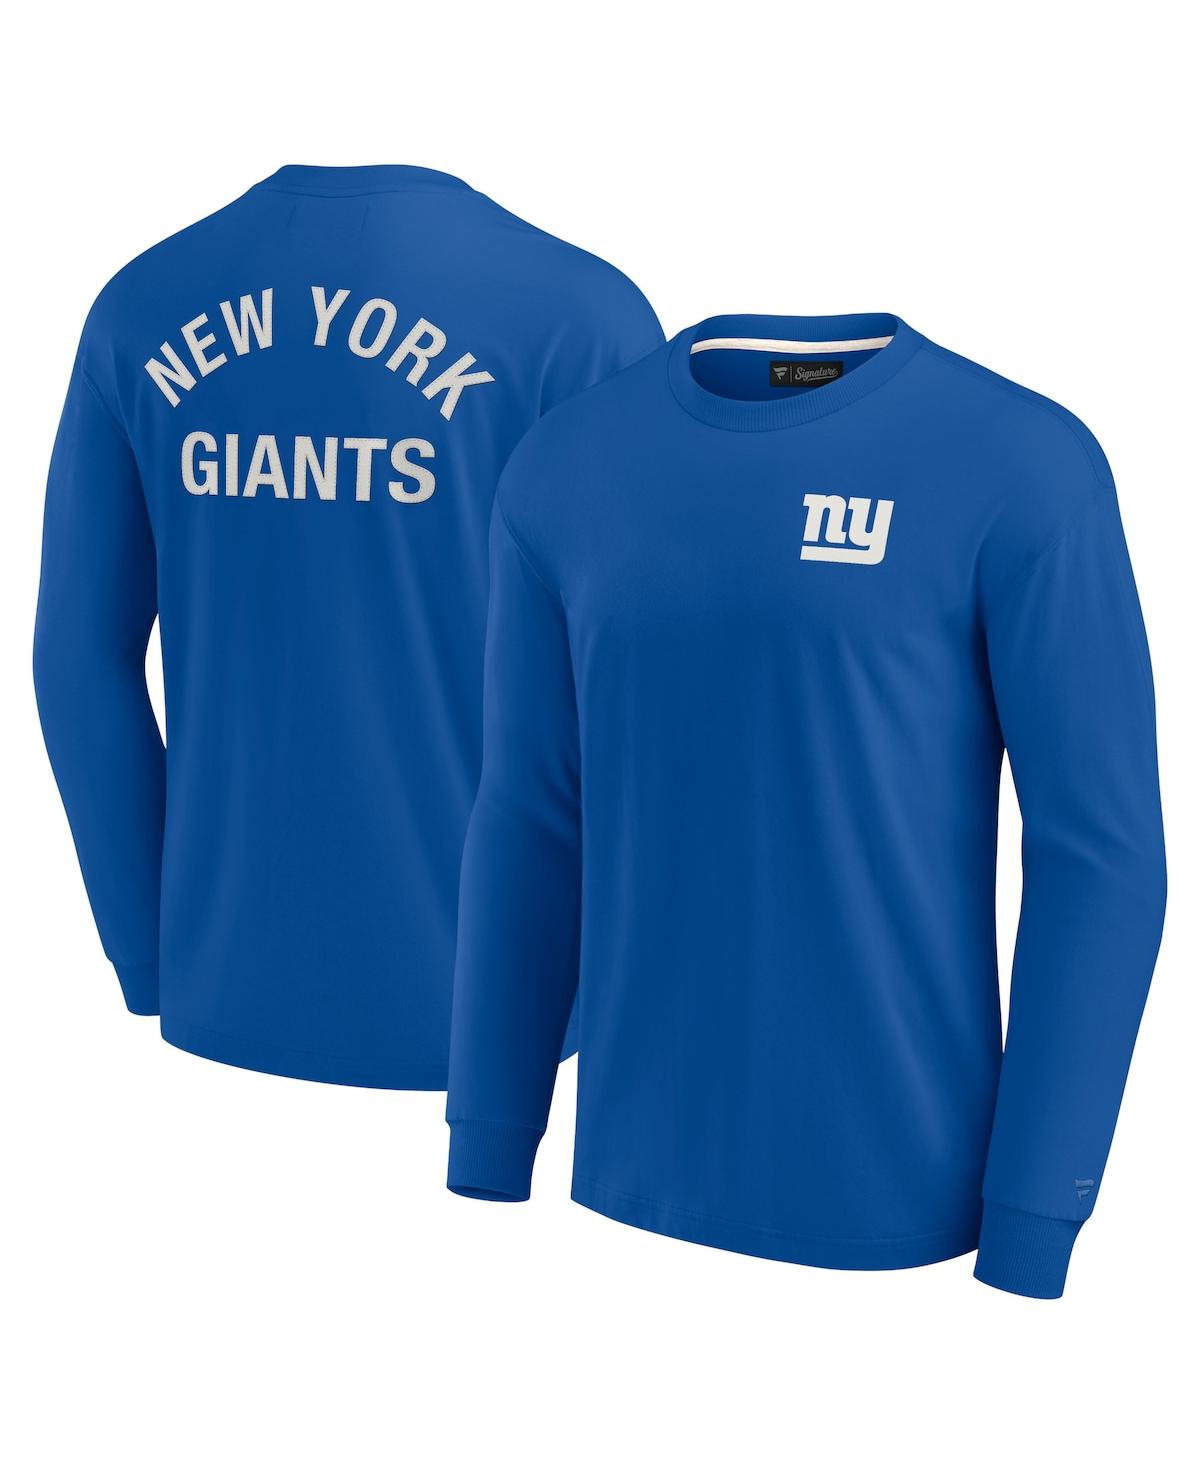 Fanatics Signature Men's And Women's  Royal New York Giants Super Soft Long Sleeve T-shirt